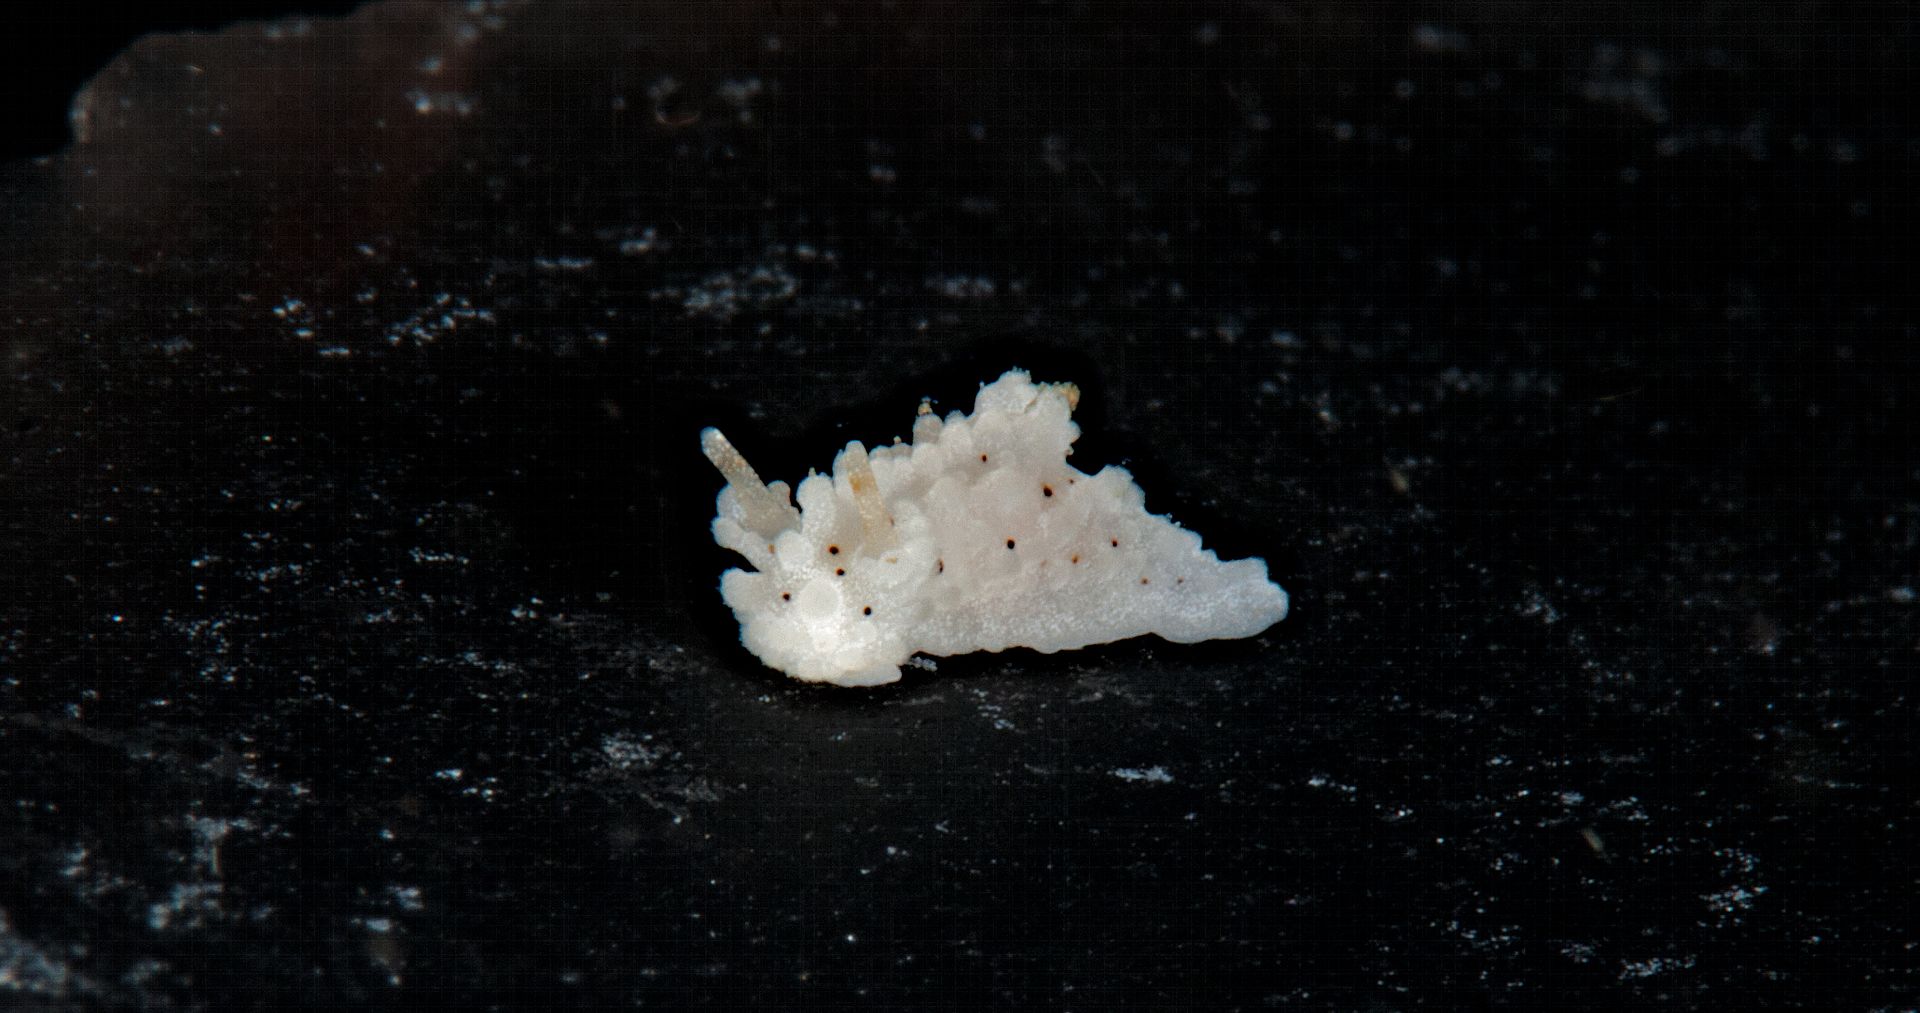 Aegires albopunctatus photo Kevins Reef 38_zps5y7o1mez.jpg